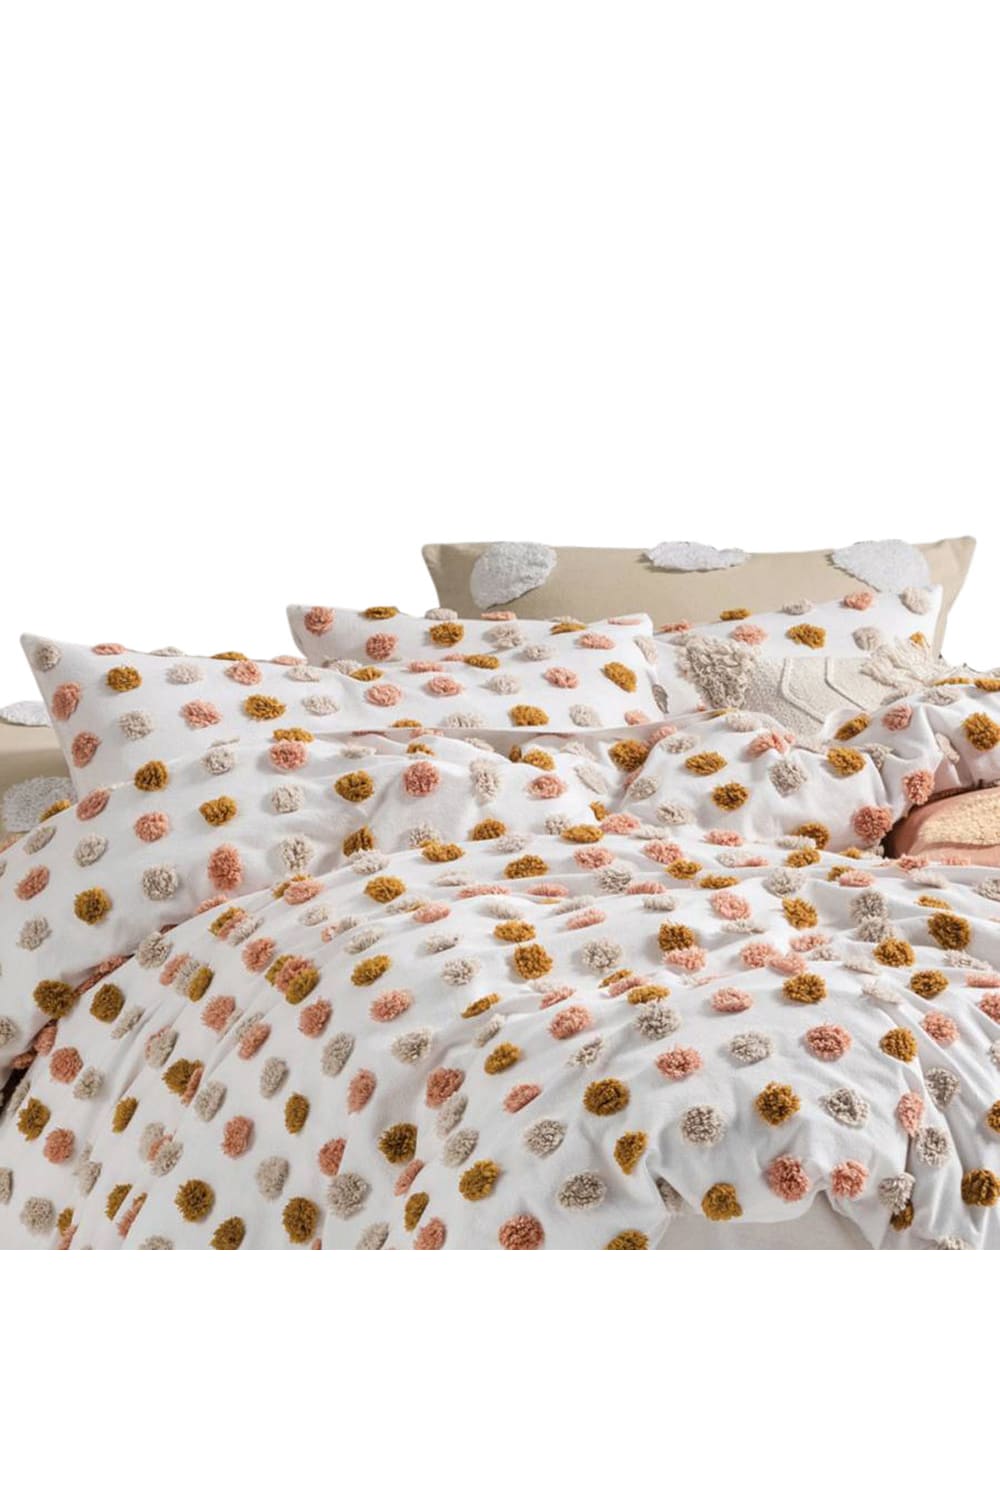 Linen House Haze Housewife Pillowcase Pair (Pink/Sand) (20 x 30in) (UK - 50 x 75cm)